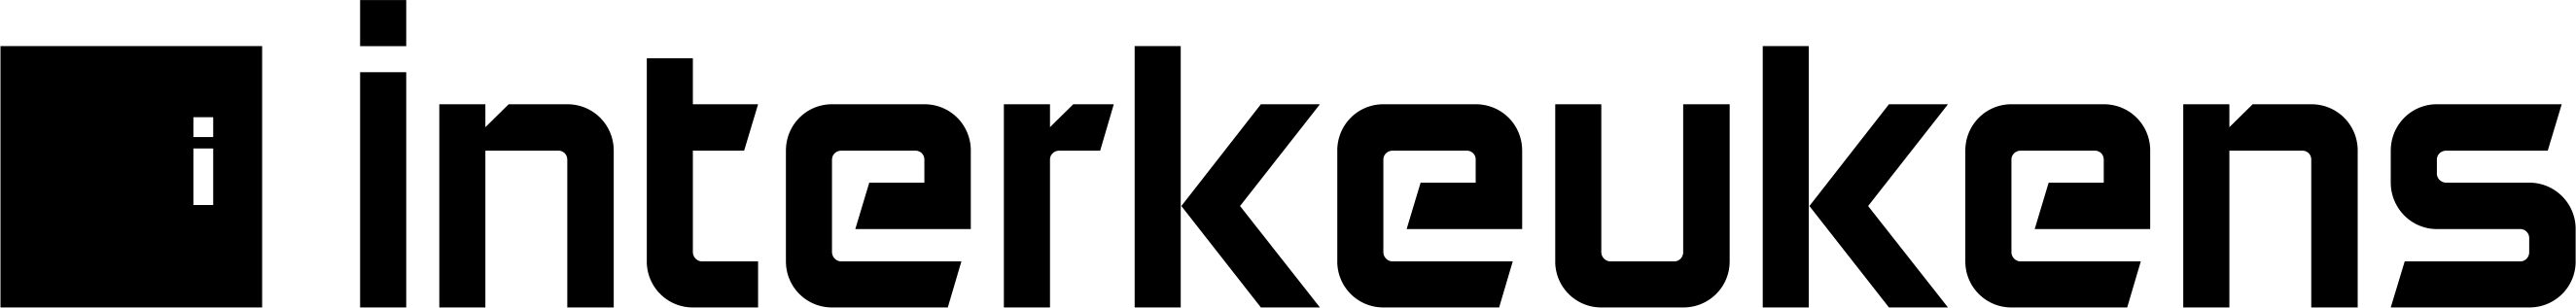 Interkeukens logo